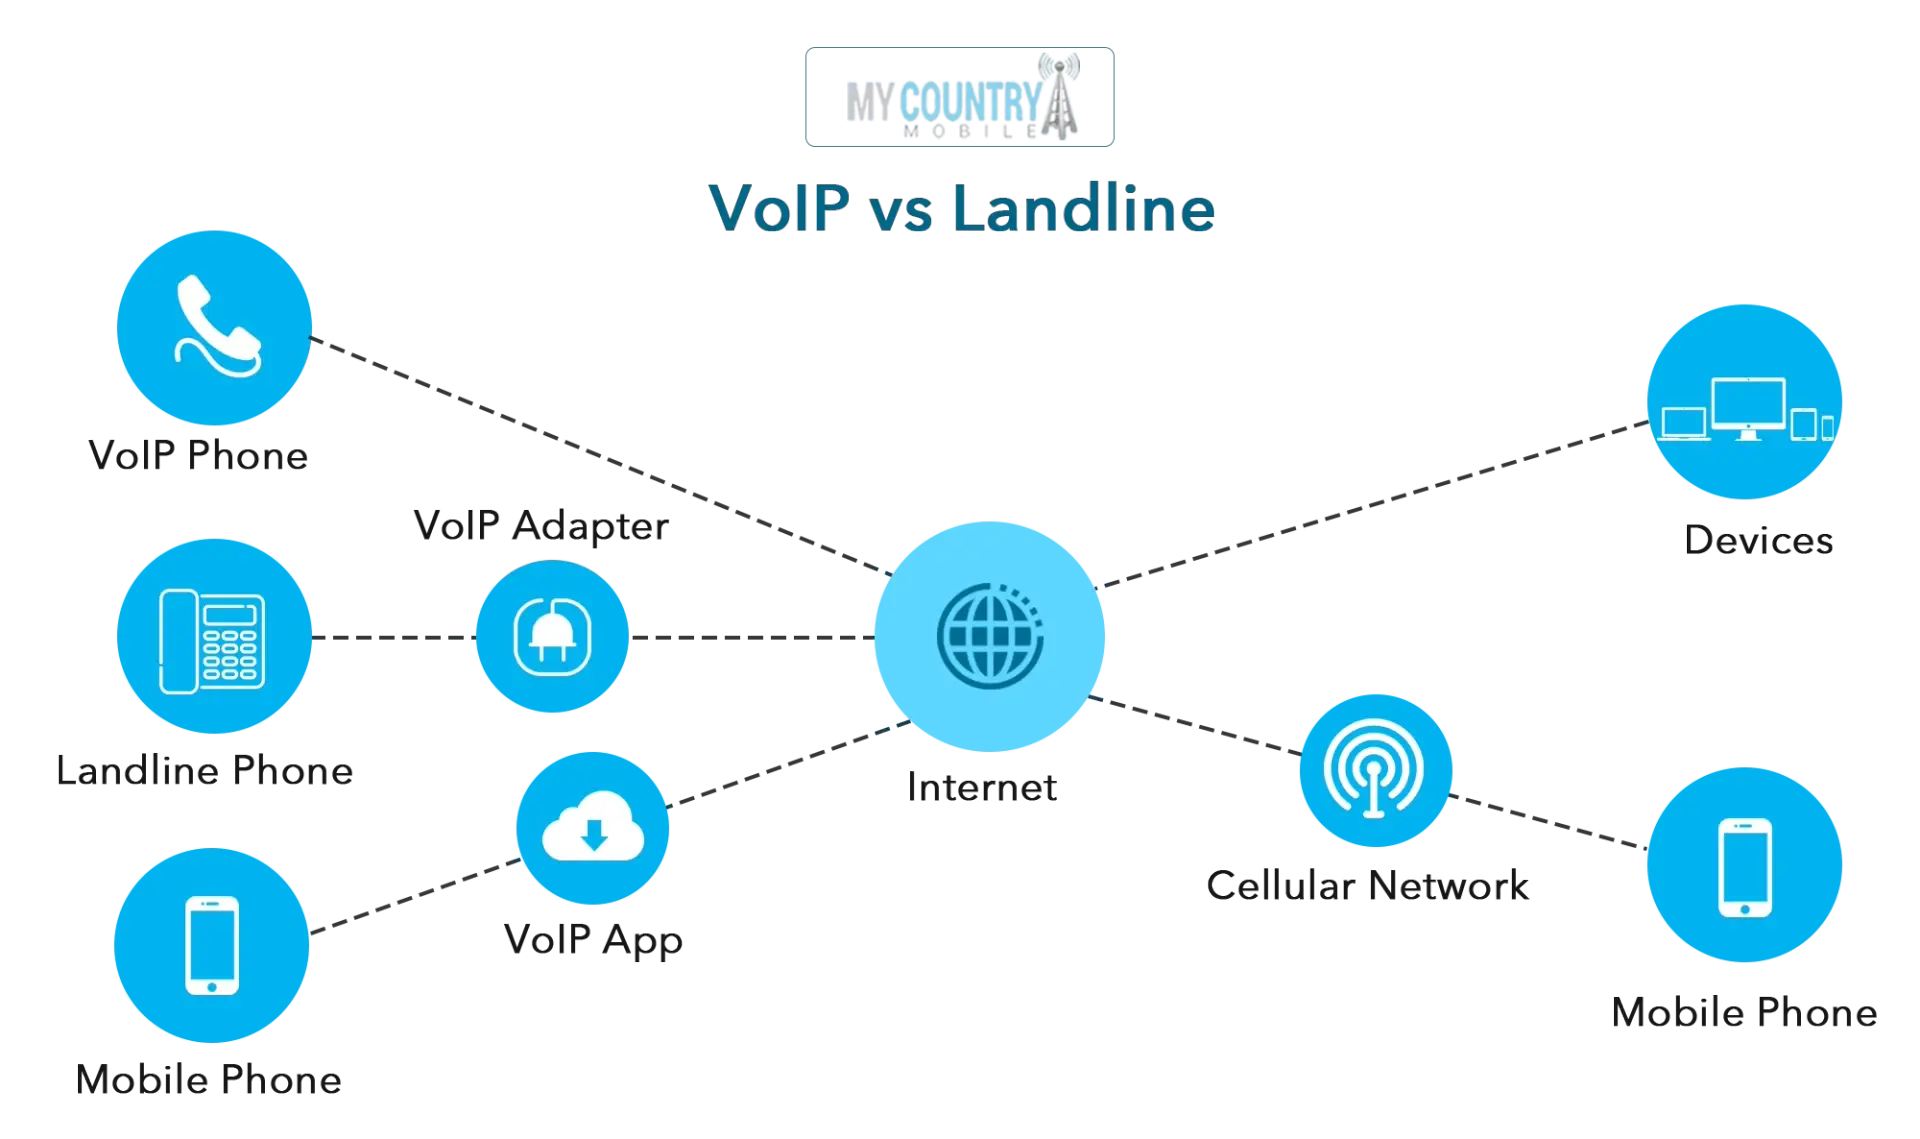 VOIP-VS-LANDLINE-1 (1)